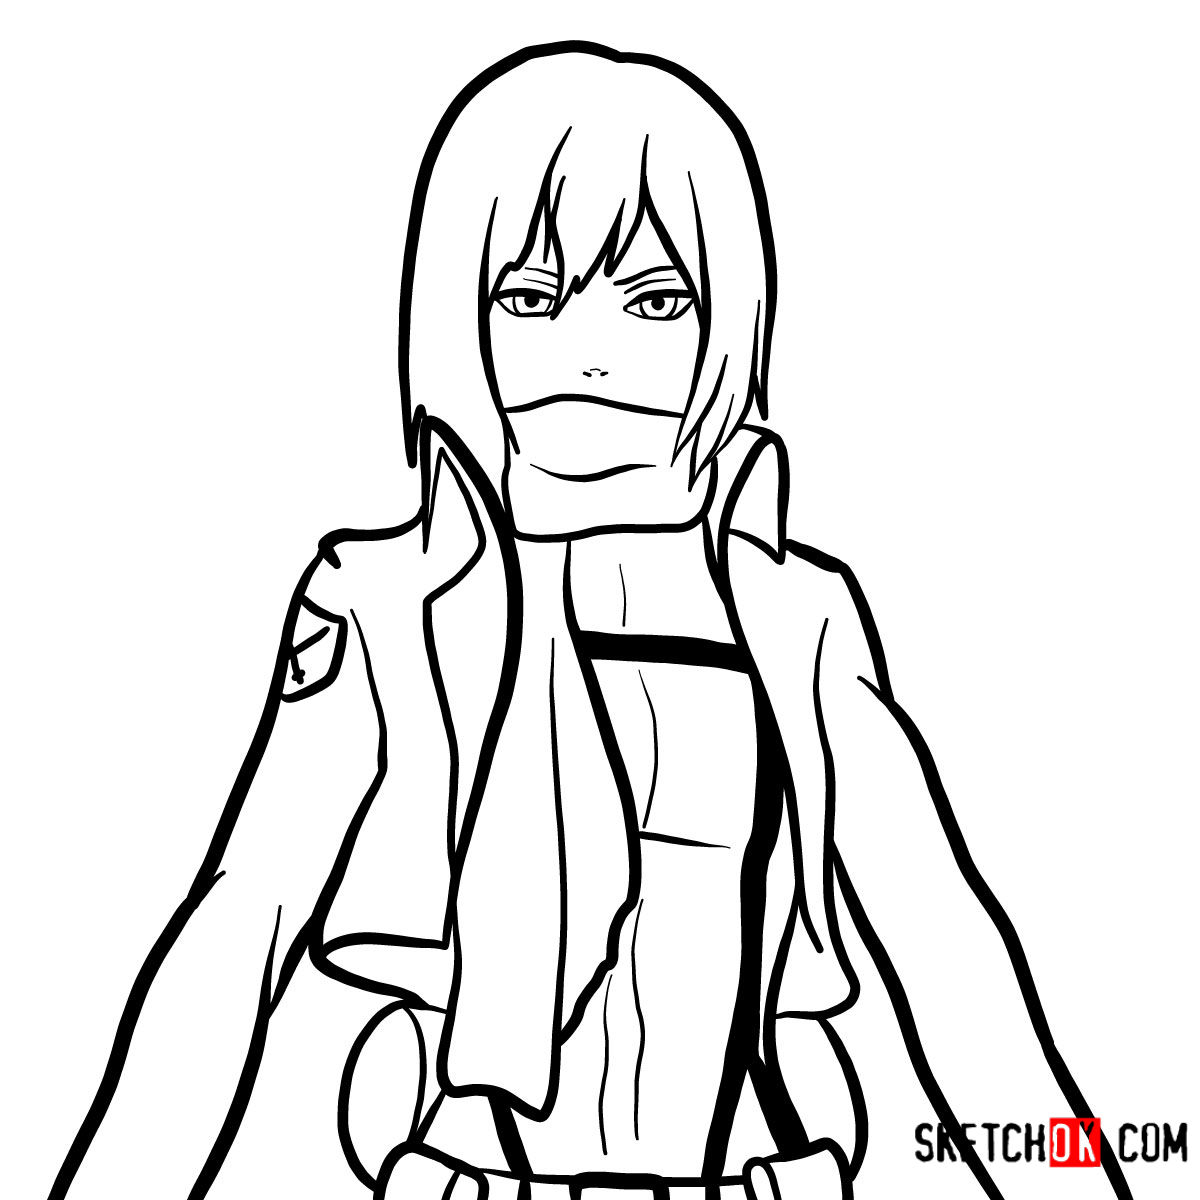 How to draw Mikasa Ackermann's face